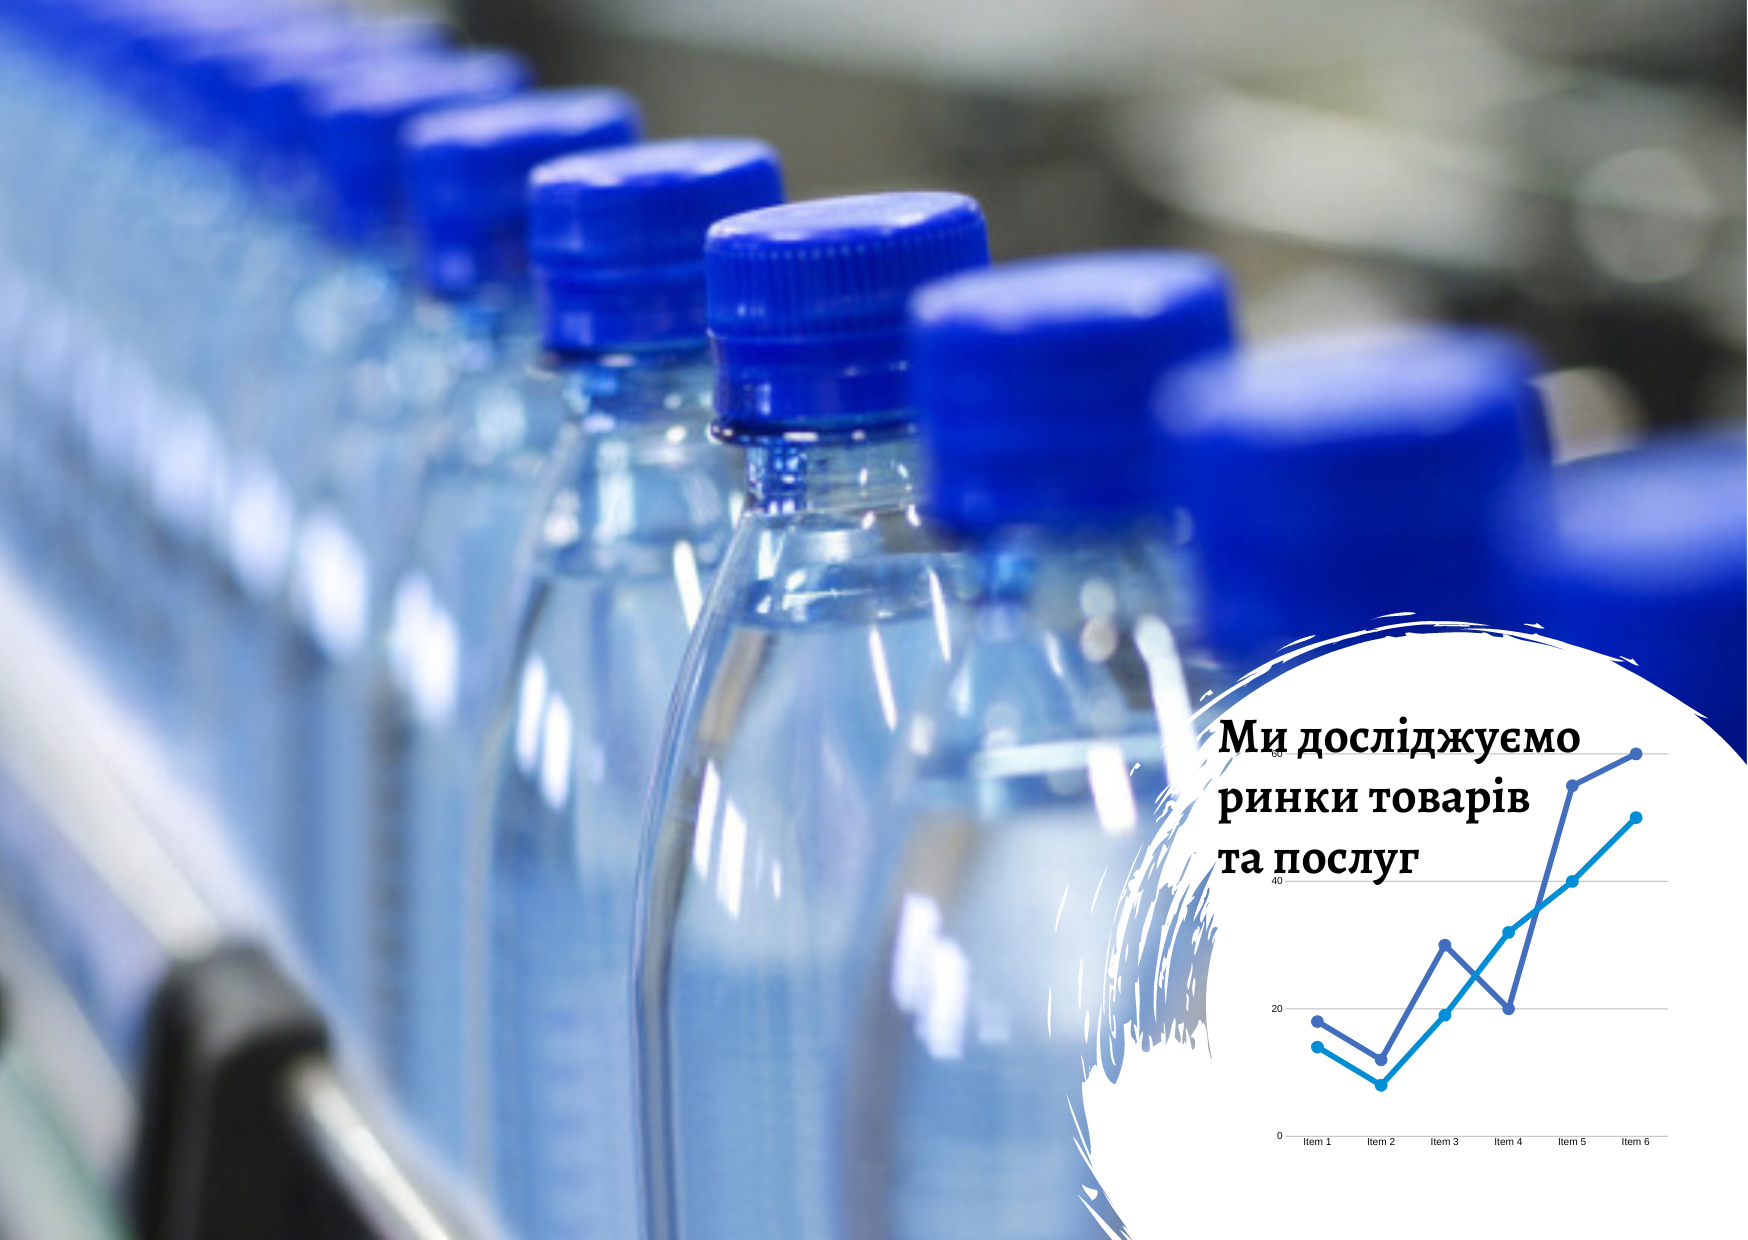 Ukrainian mineral water market research report